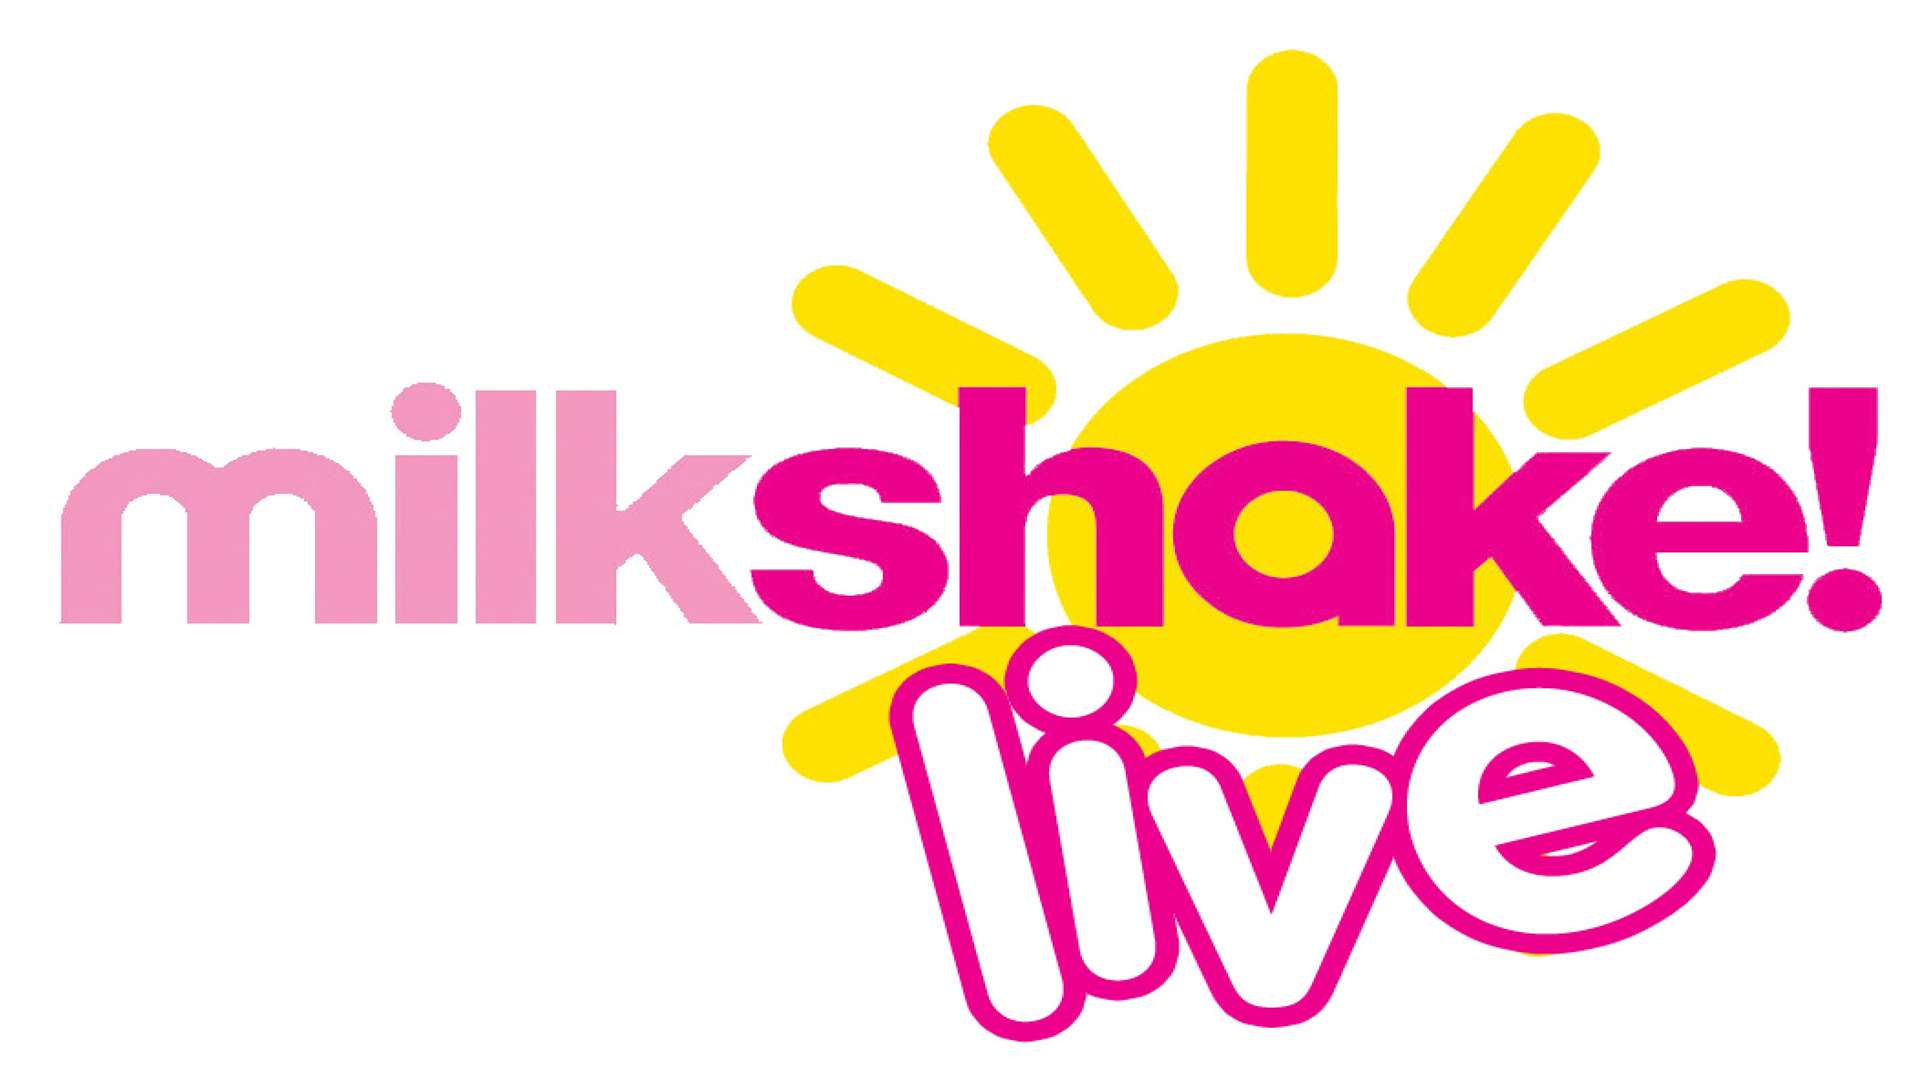 The Milkshake Live team will be at Dartford's Orchard Theatre